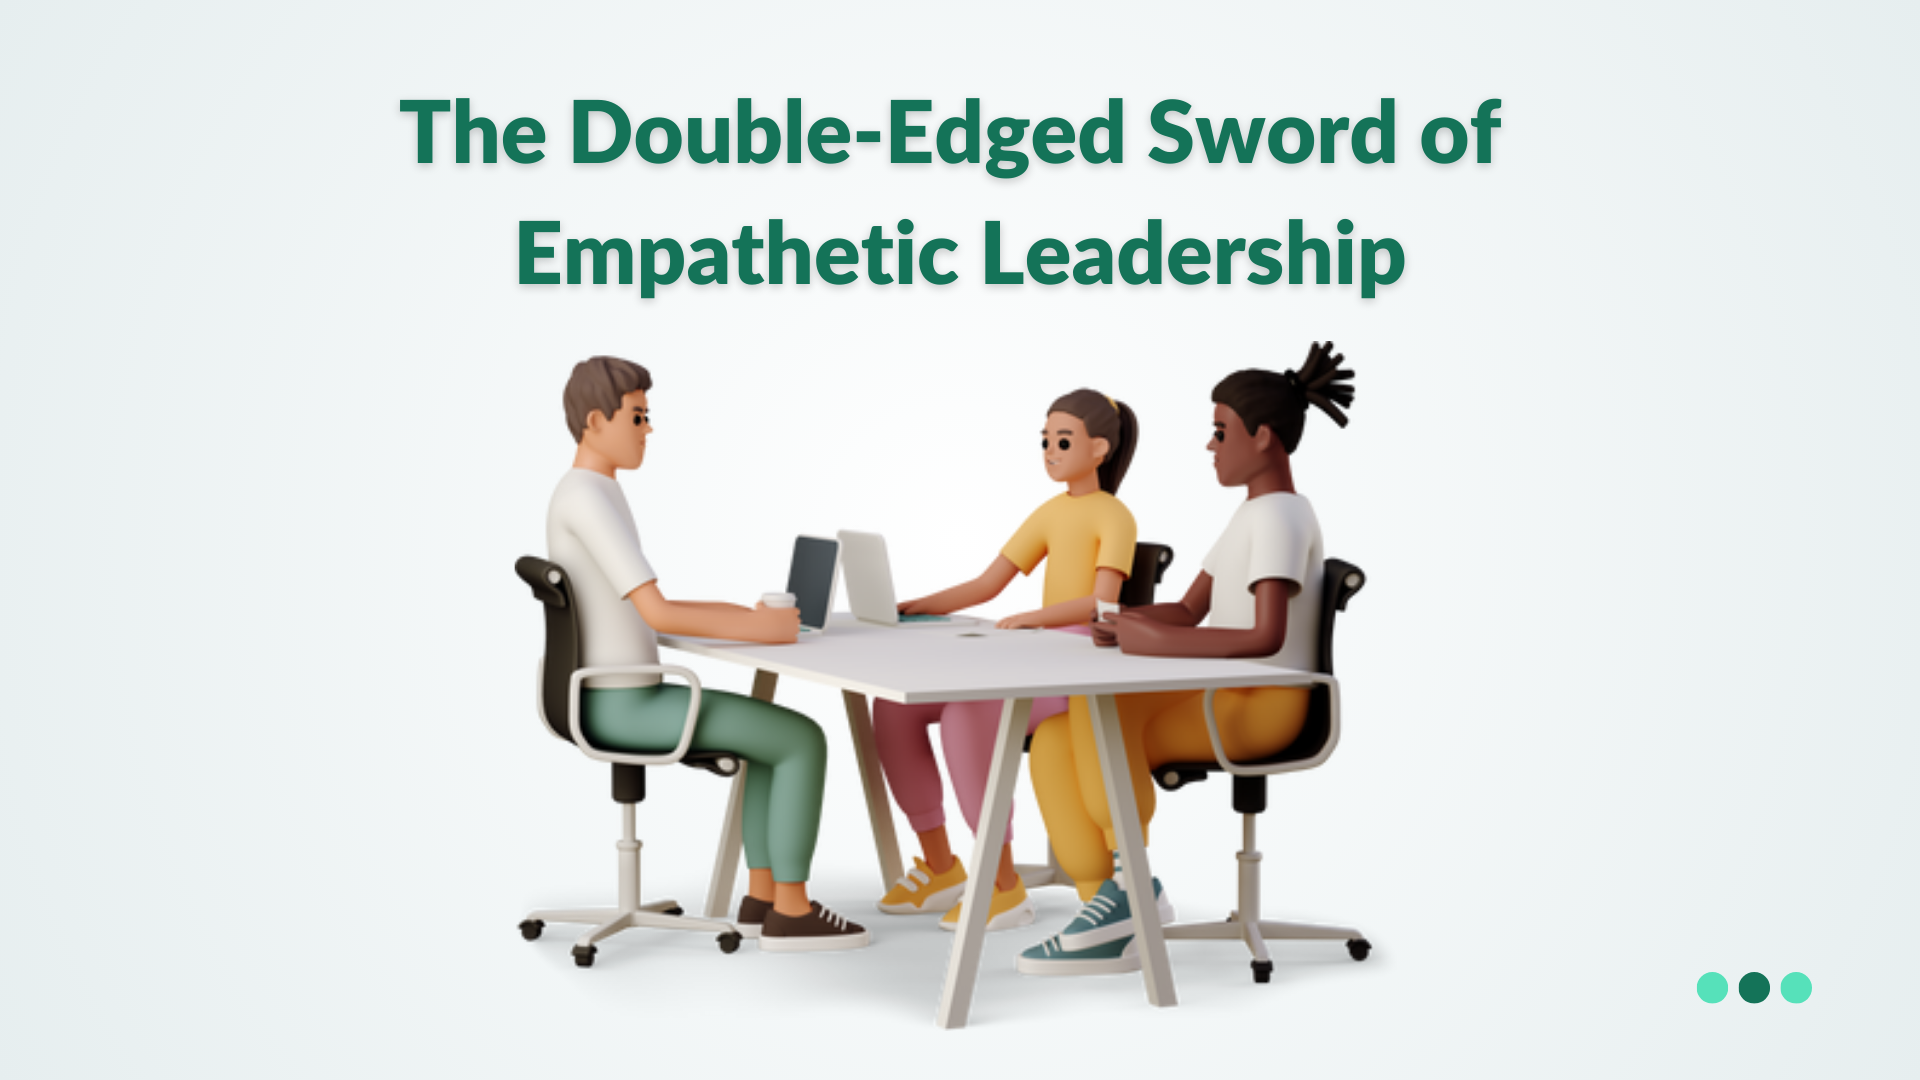 The Double-Edged Sword of Empathetic Leadership